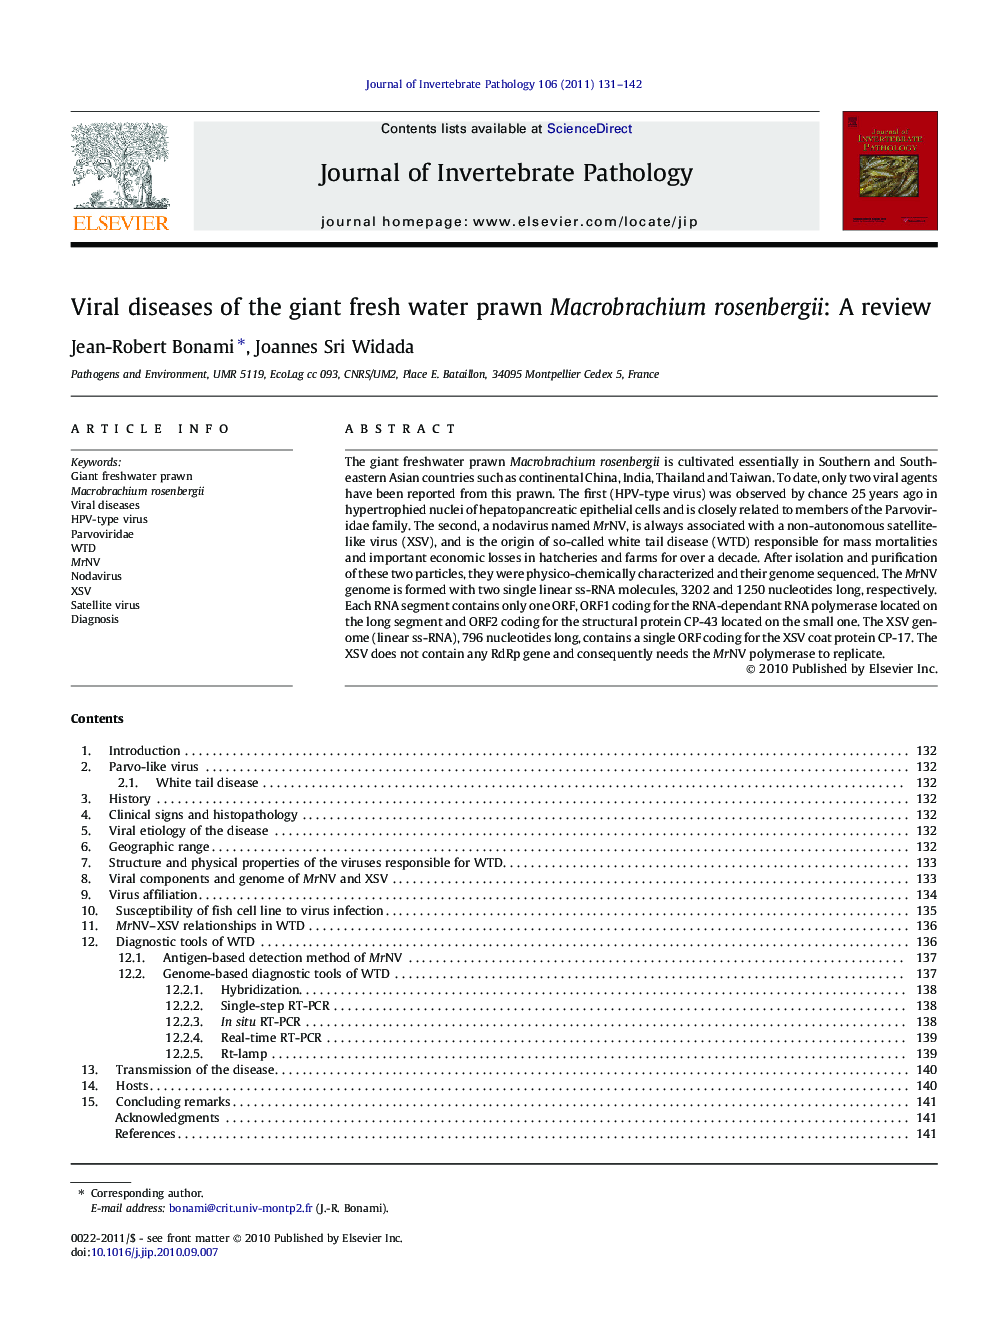 Viral diseases of the giant fresh water prawn Macrobrachium rosenbergii: A review